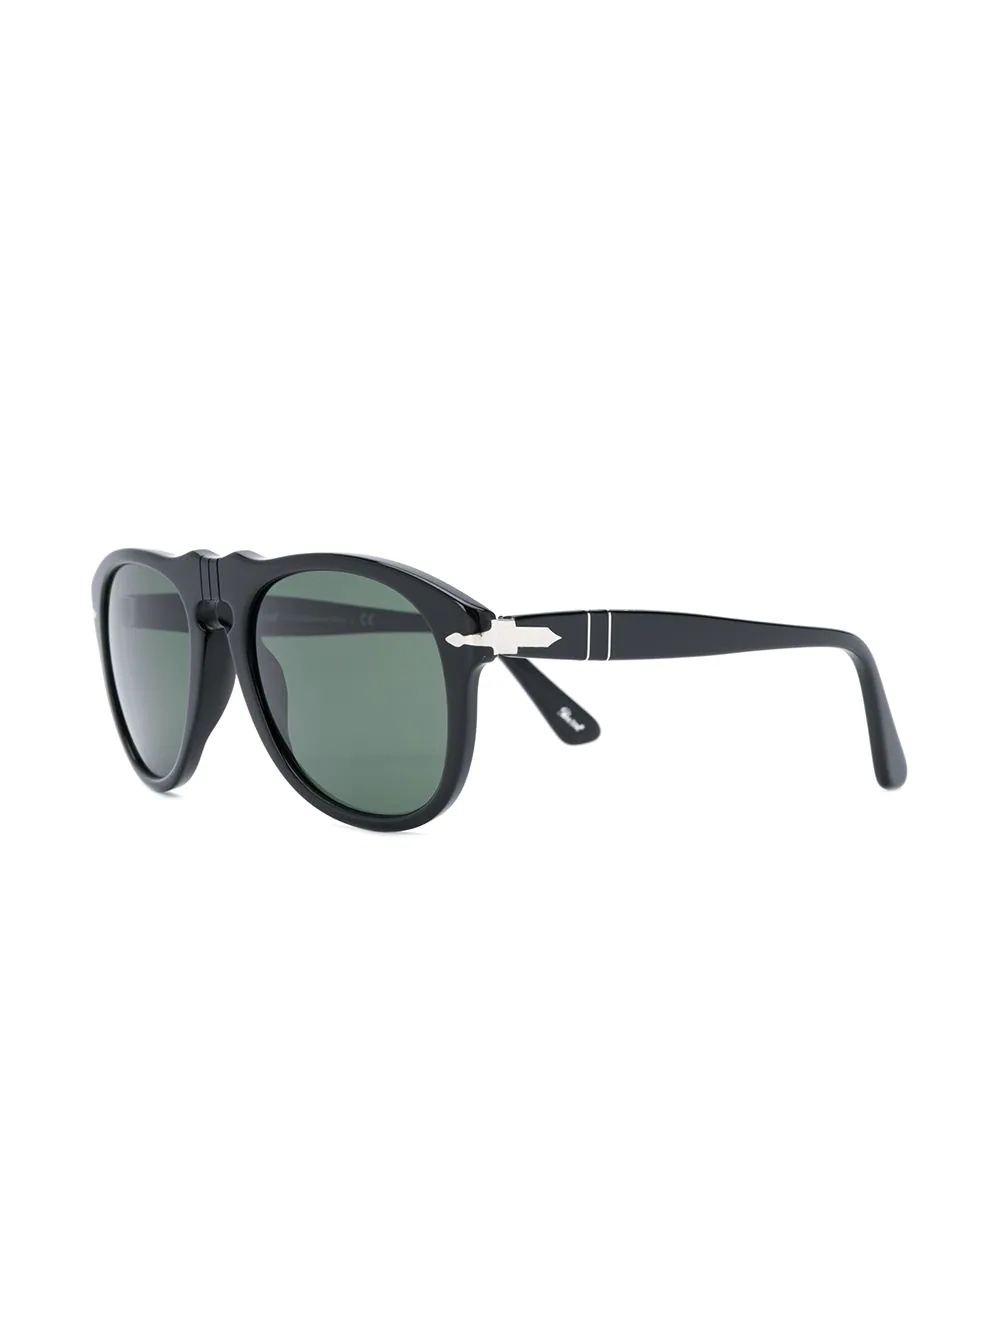 aviator-style sunglasses - 2